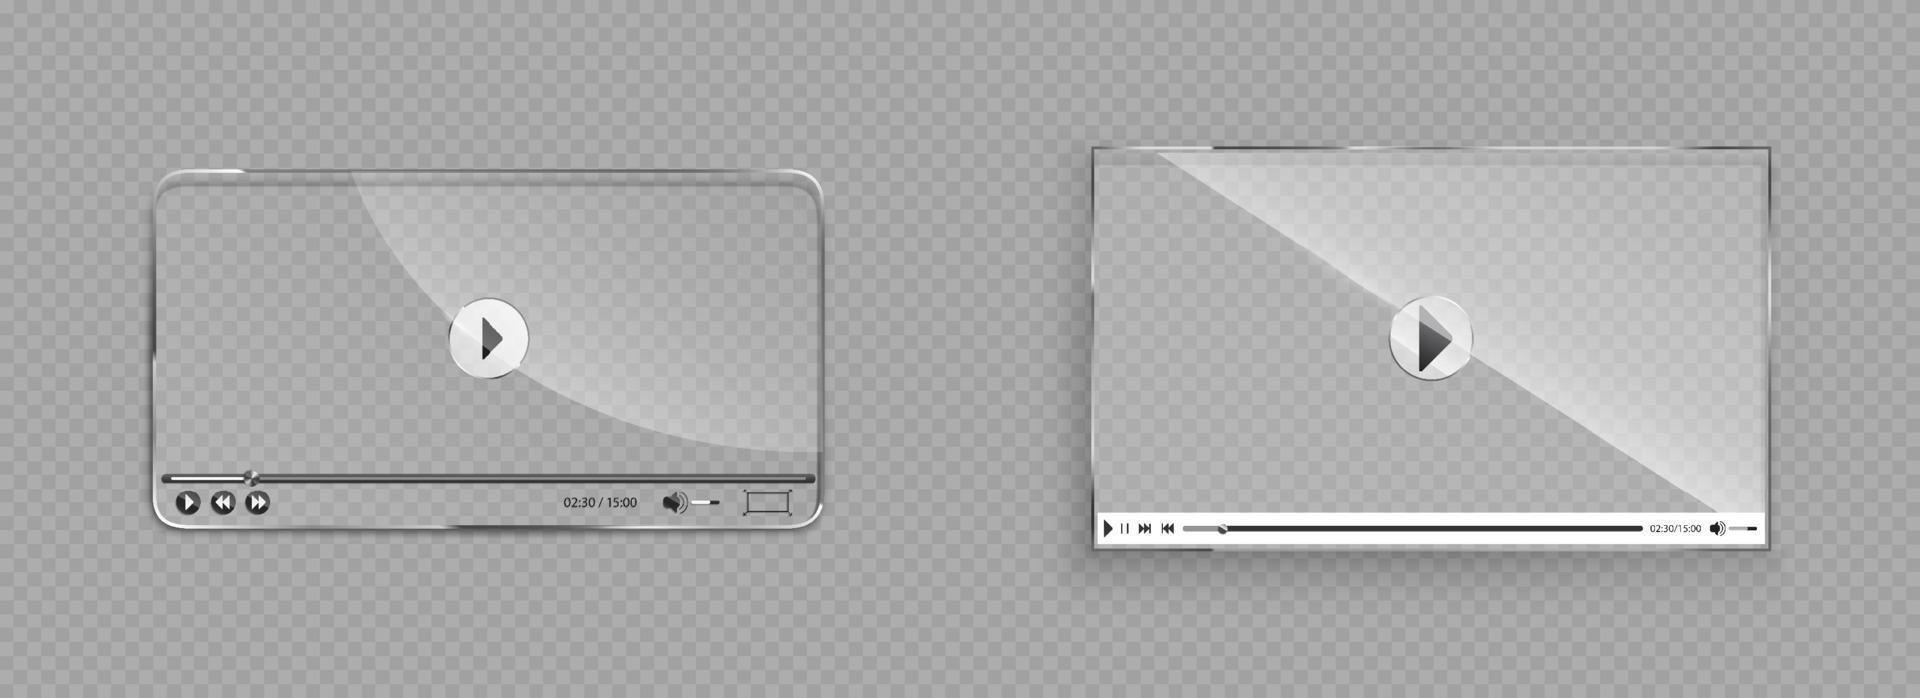 Glass video player interface, transparent window vector